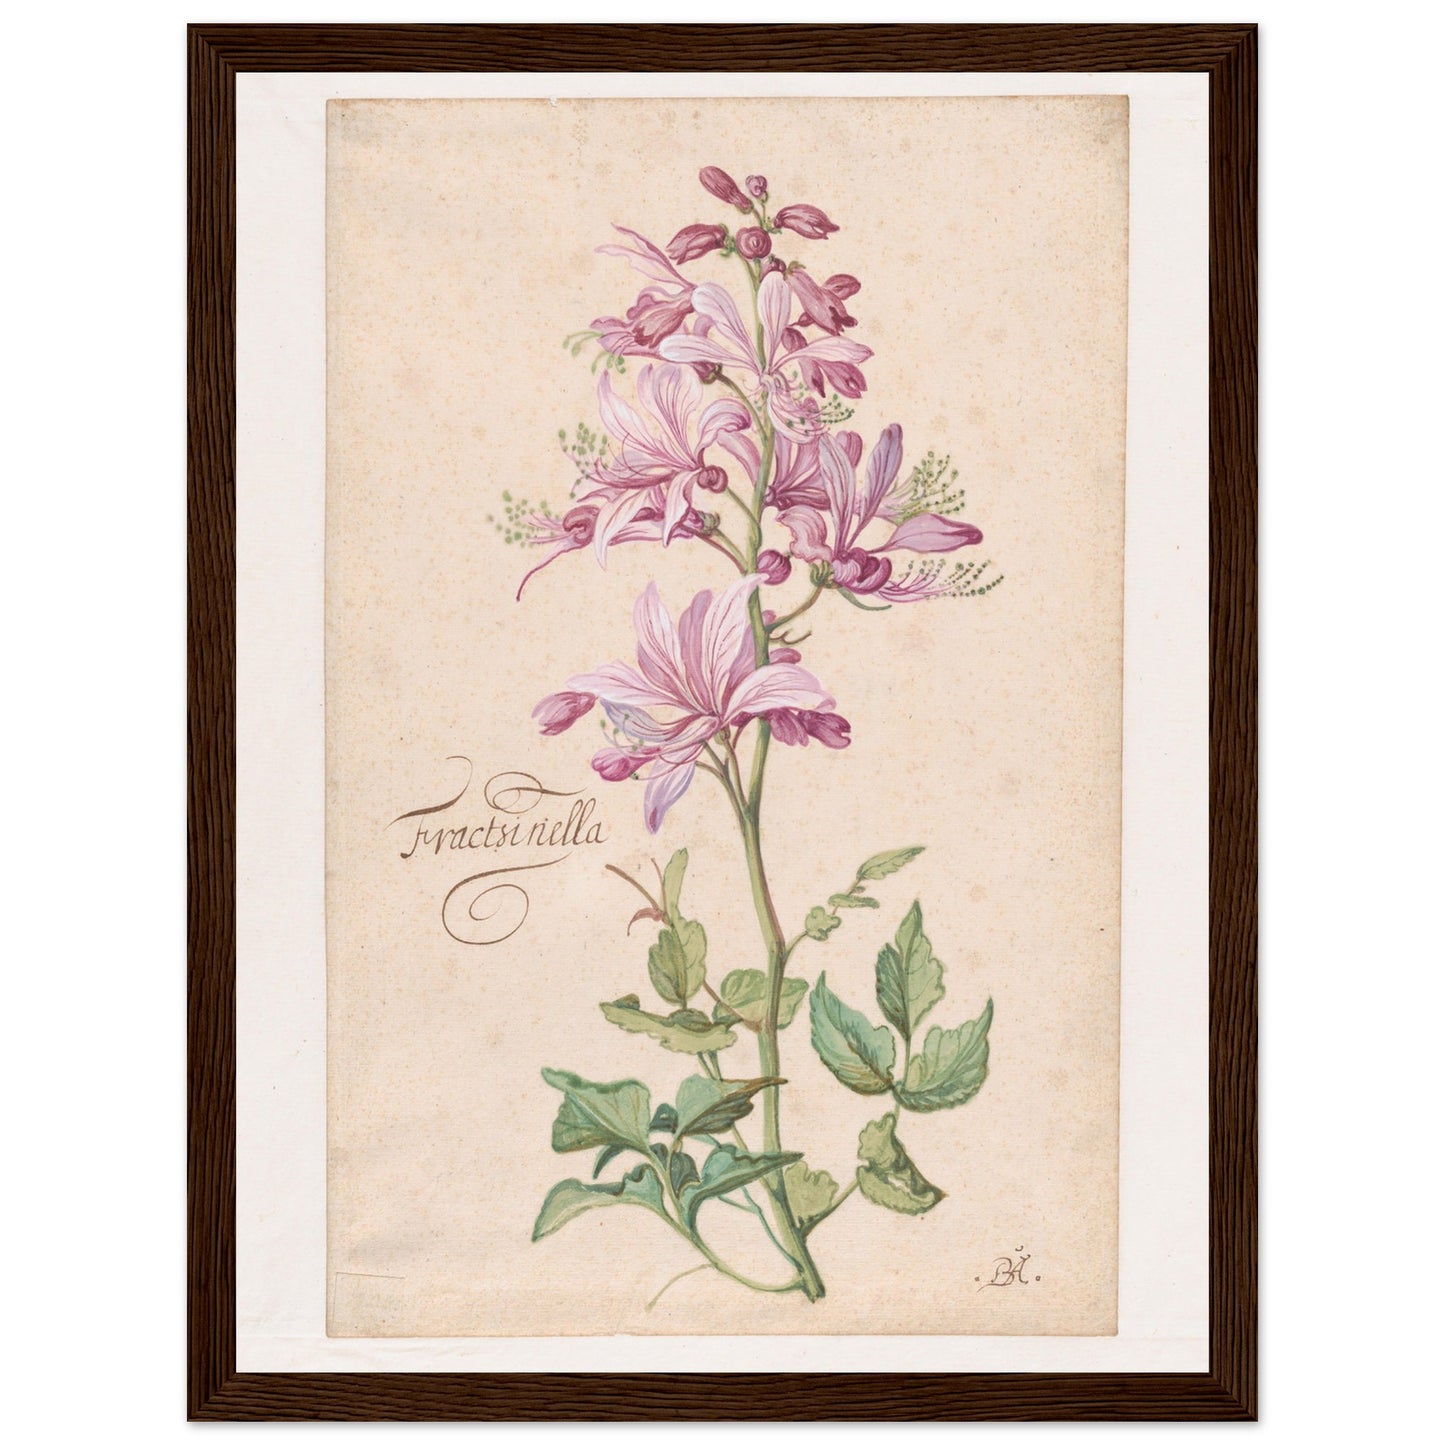 Dictamnus Flower art print in a dark wood frame | By Print Room Ltd